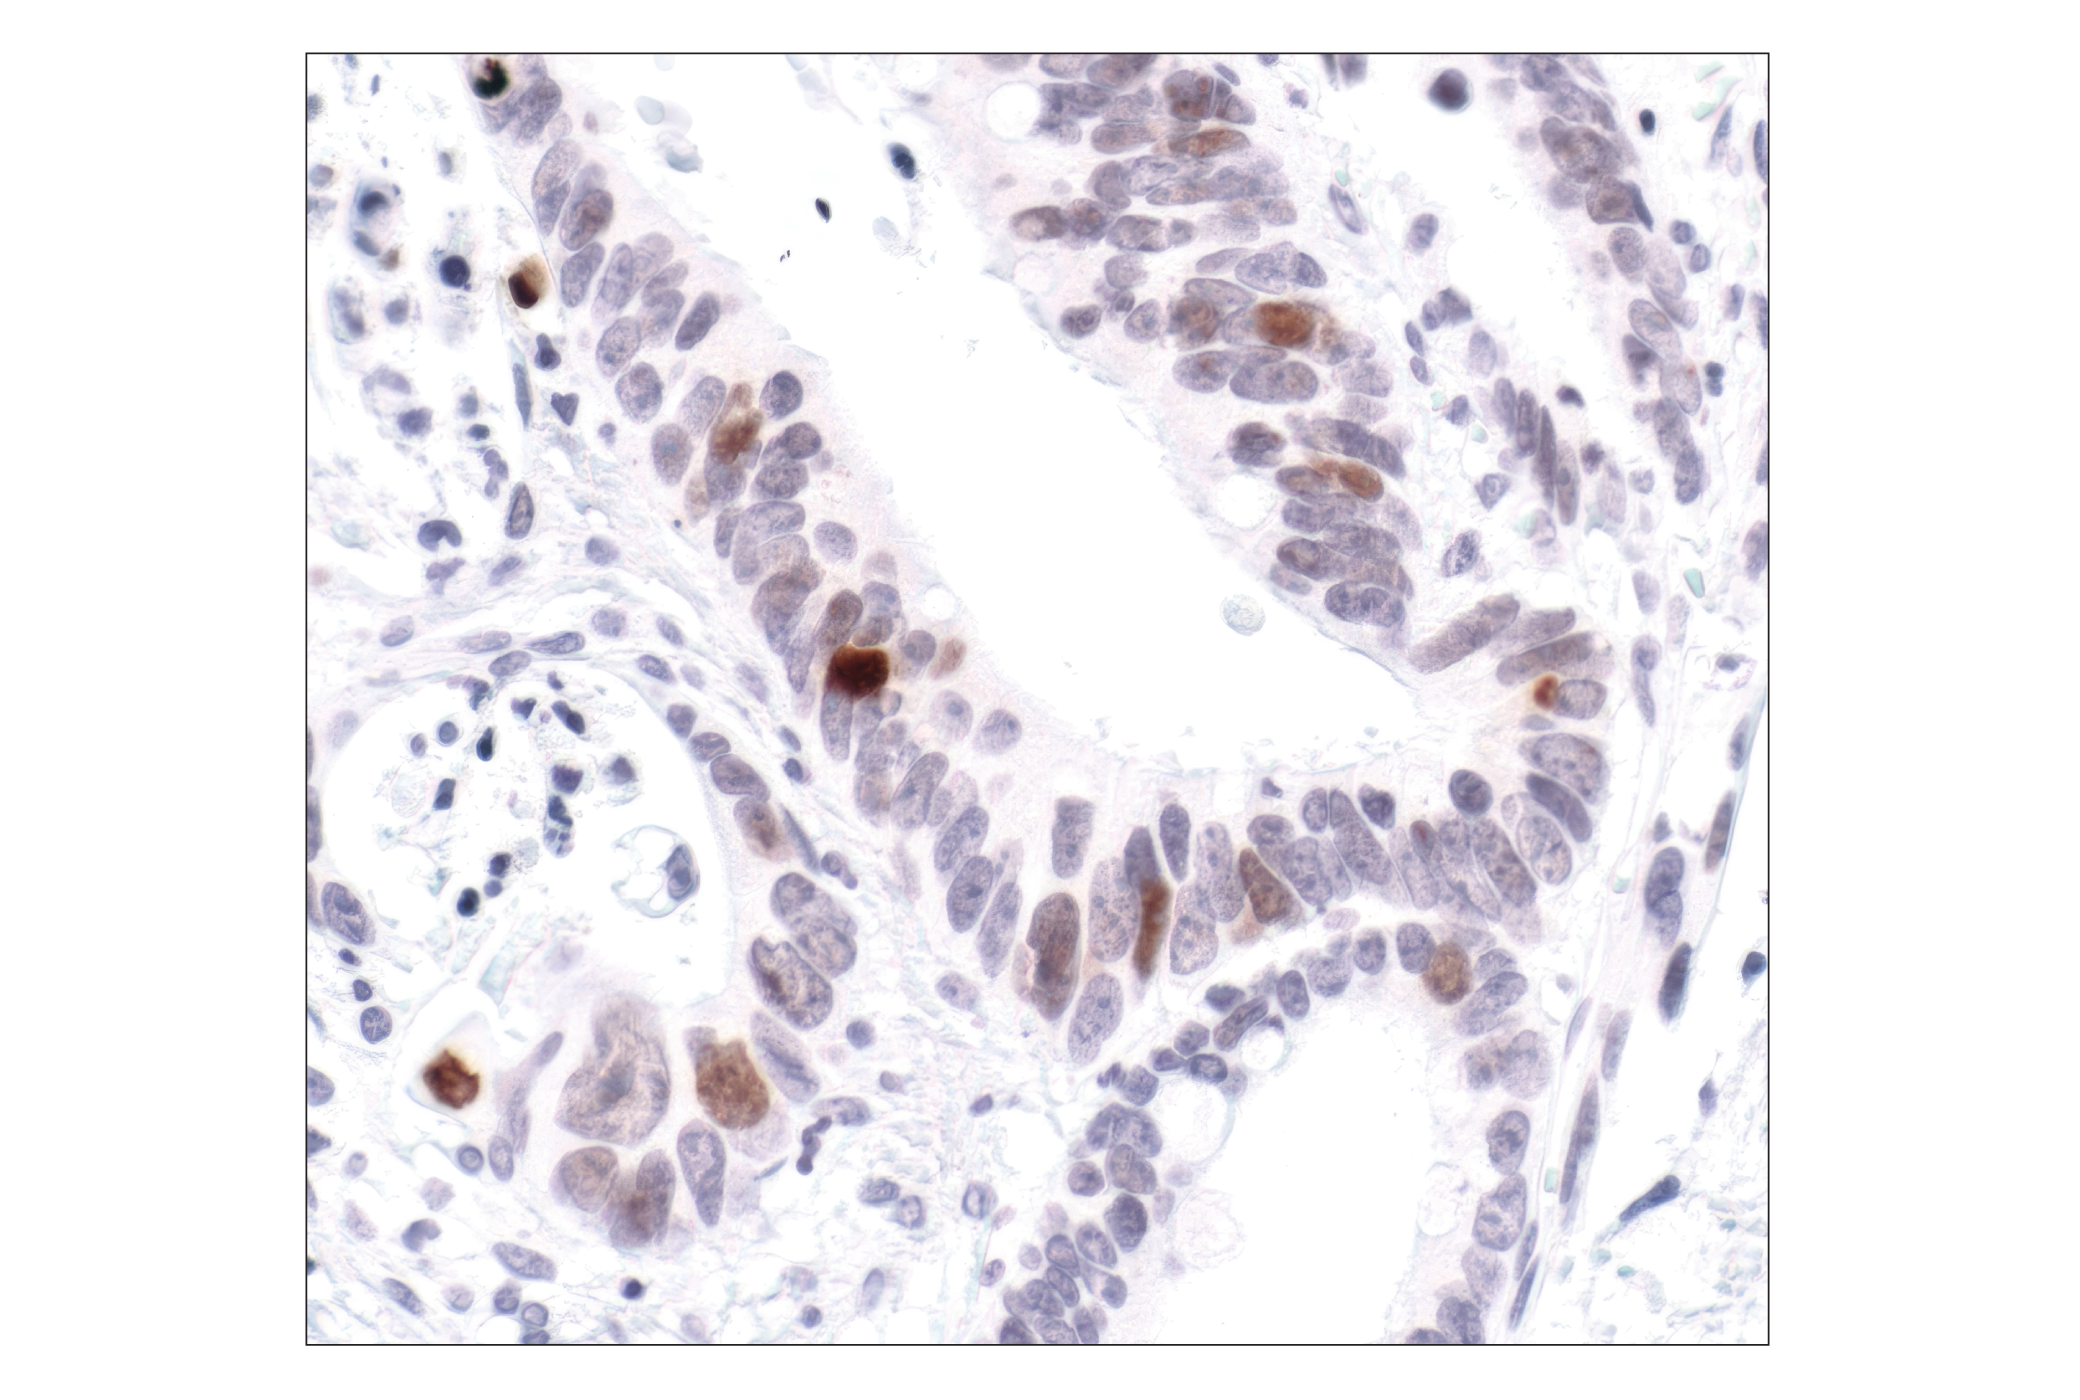  Image 10: PhosphoPlus® Histone H2A.X (Ser139) Antibody Duet